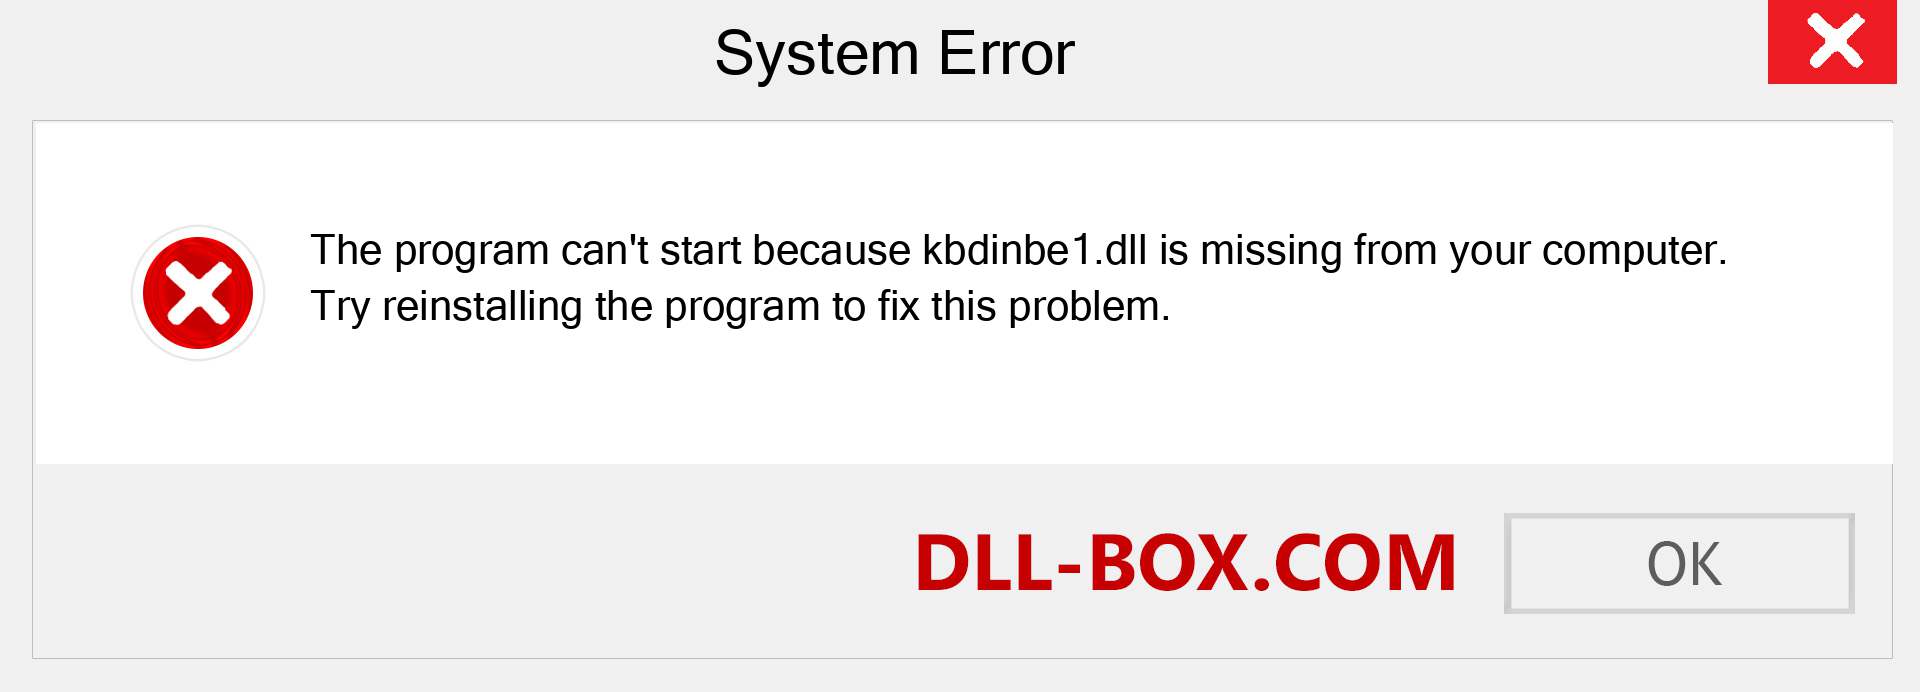  kbdinbe1.dll file is missing?. Download for Windows 7, 8, 10 - Fix  kbdinbe1 dll Missing Error on Windows, photos, images